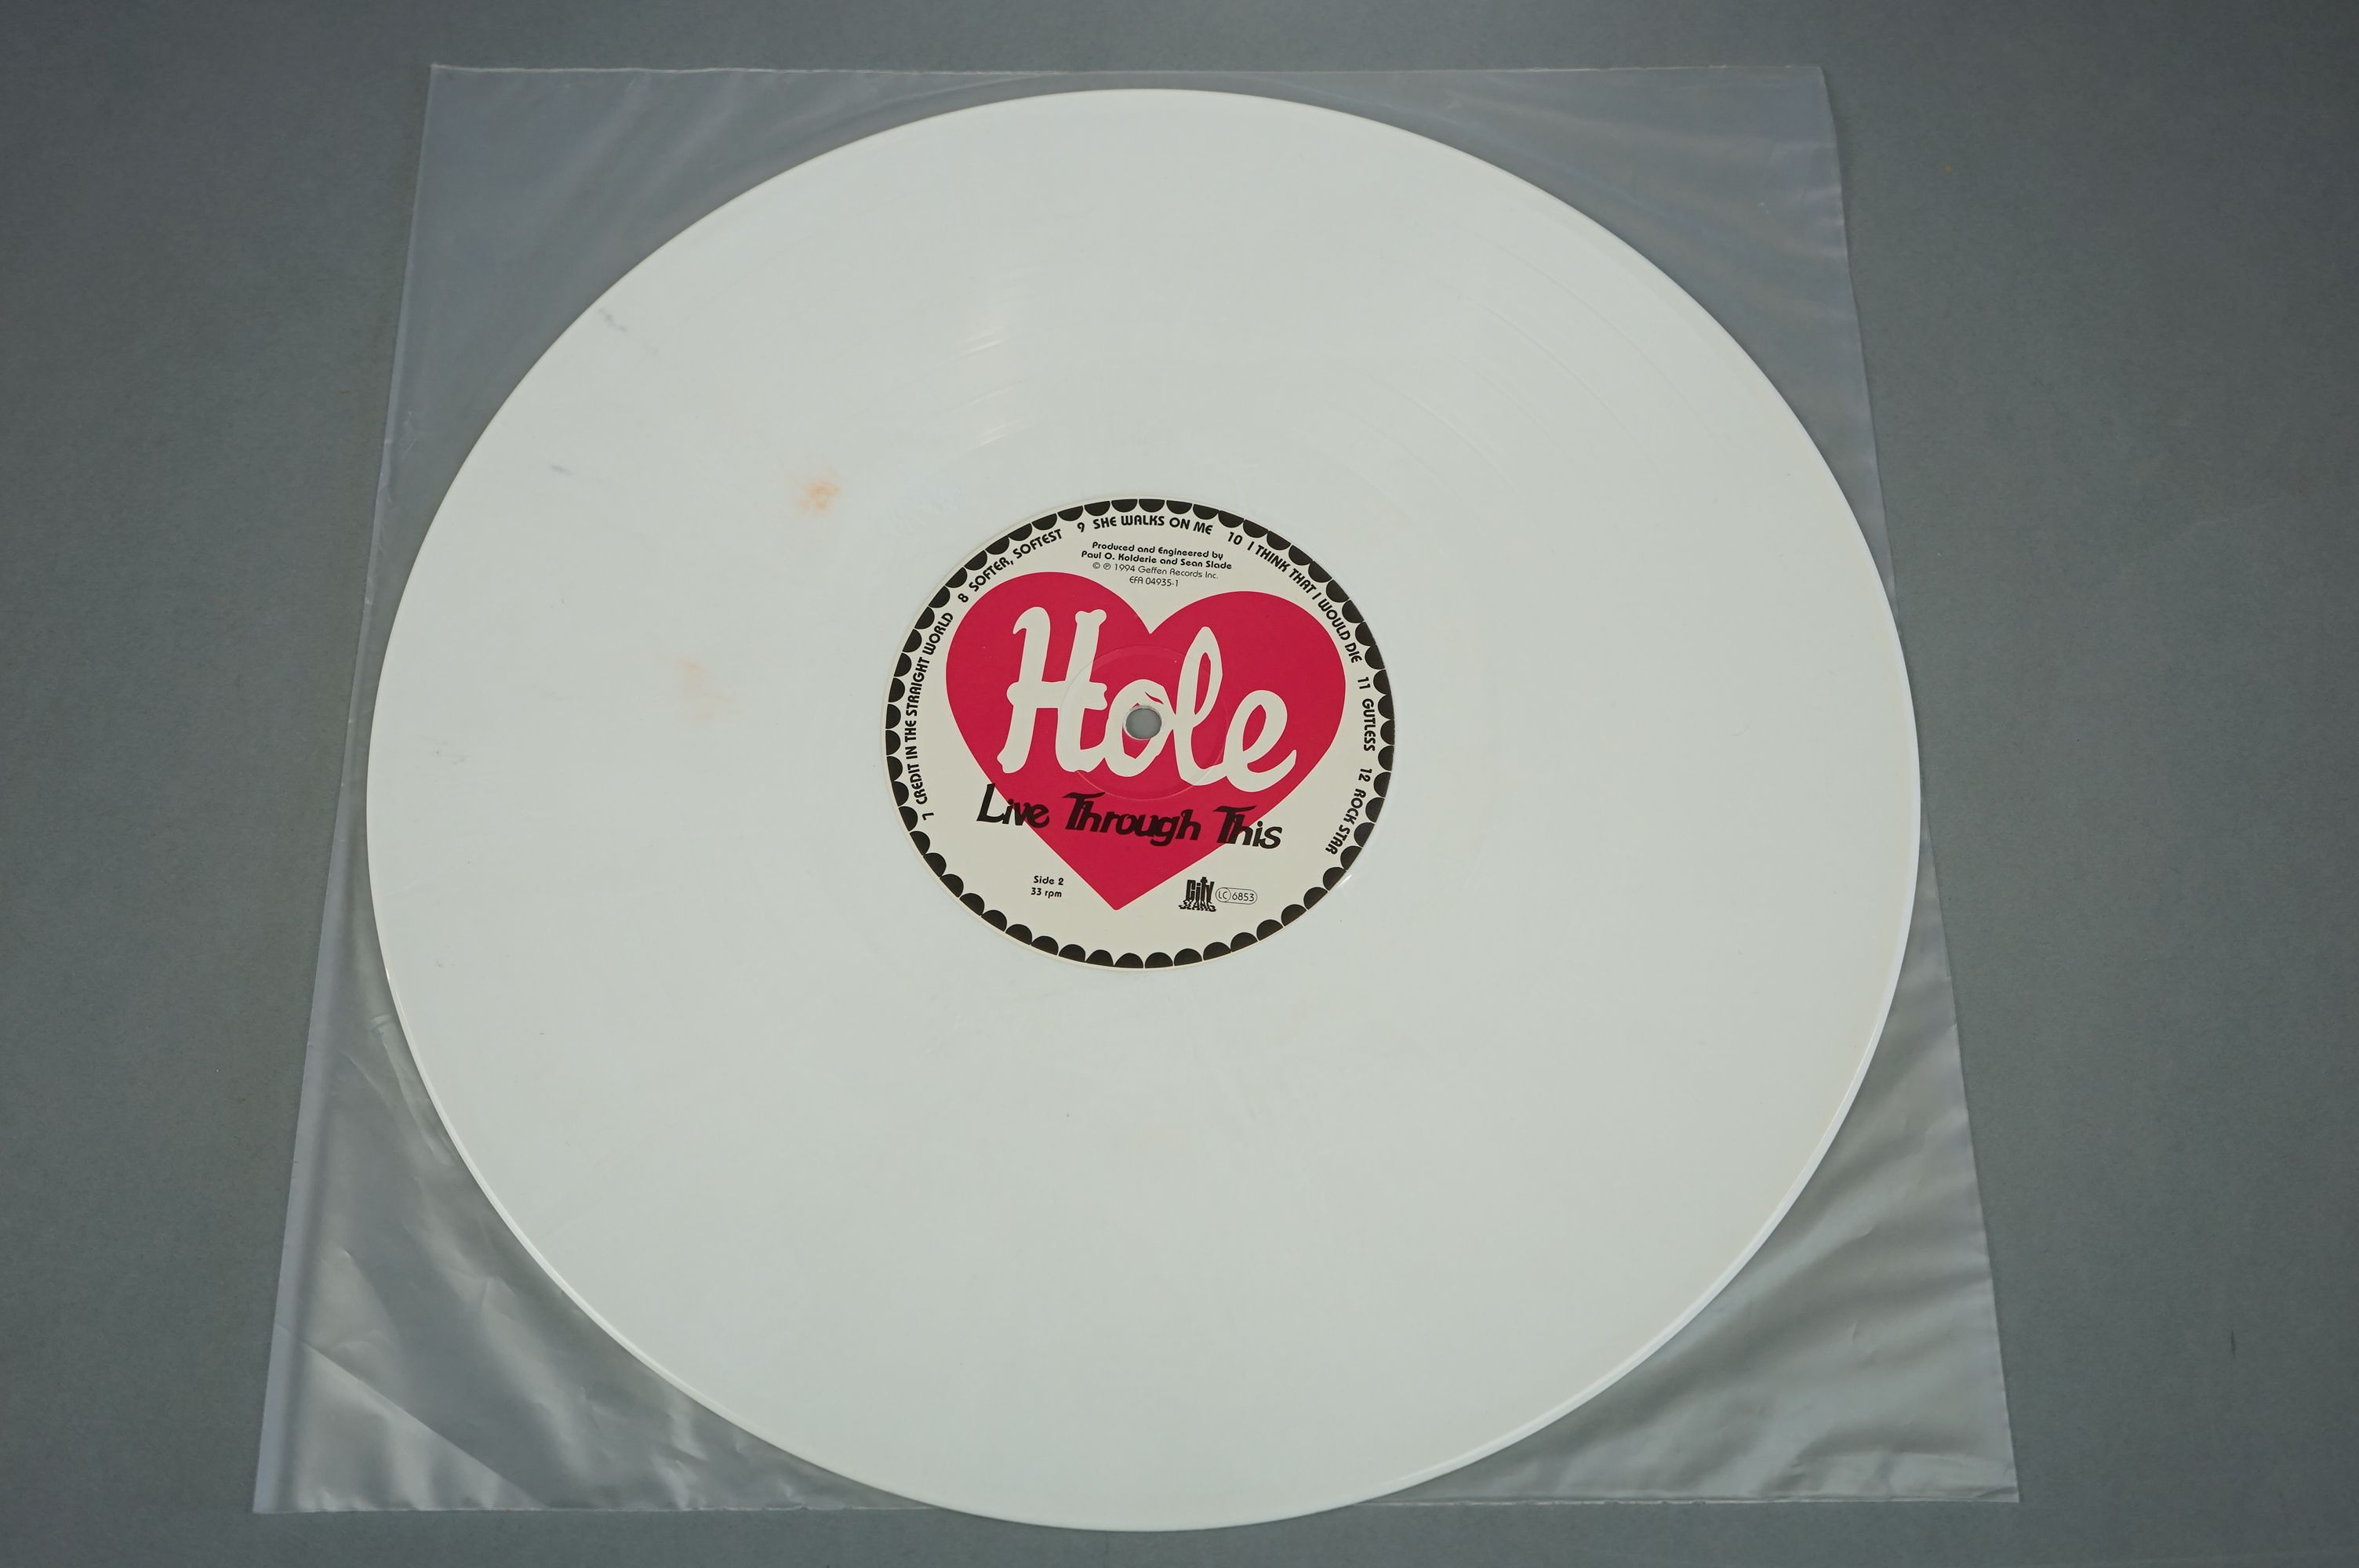 Vinyl - Hole Live Through This LP ltd edn white vinyl on City Slang LC683 vg++ - Image 3 of 4